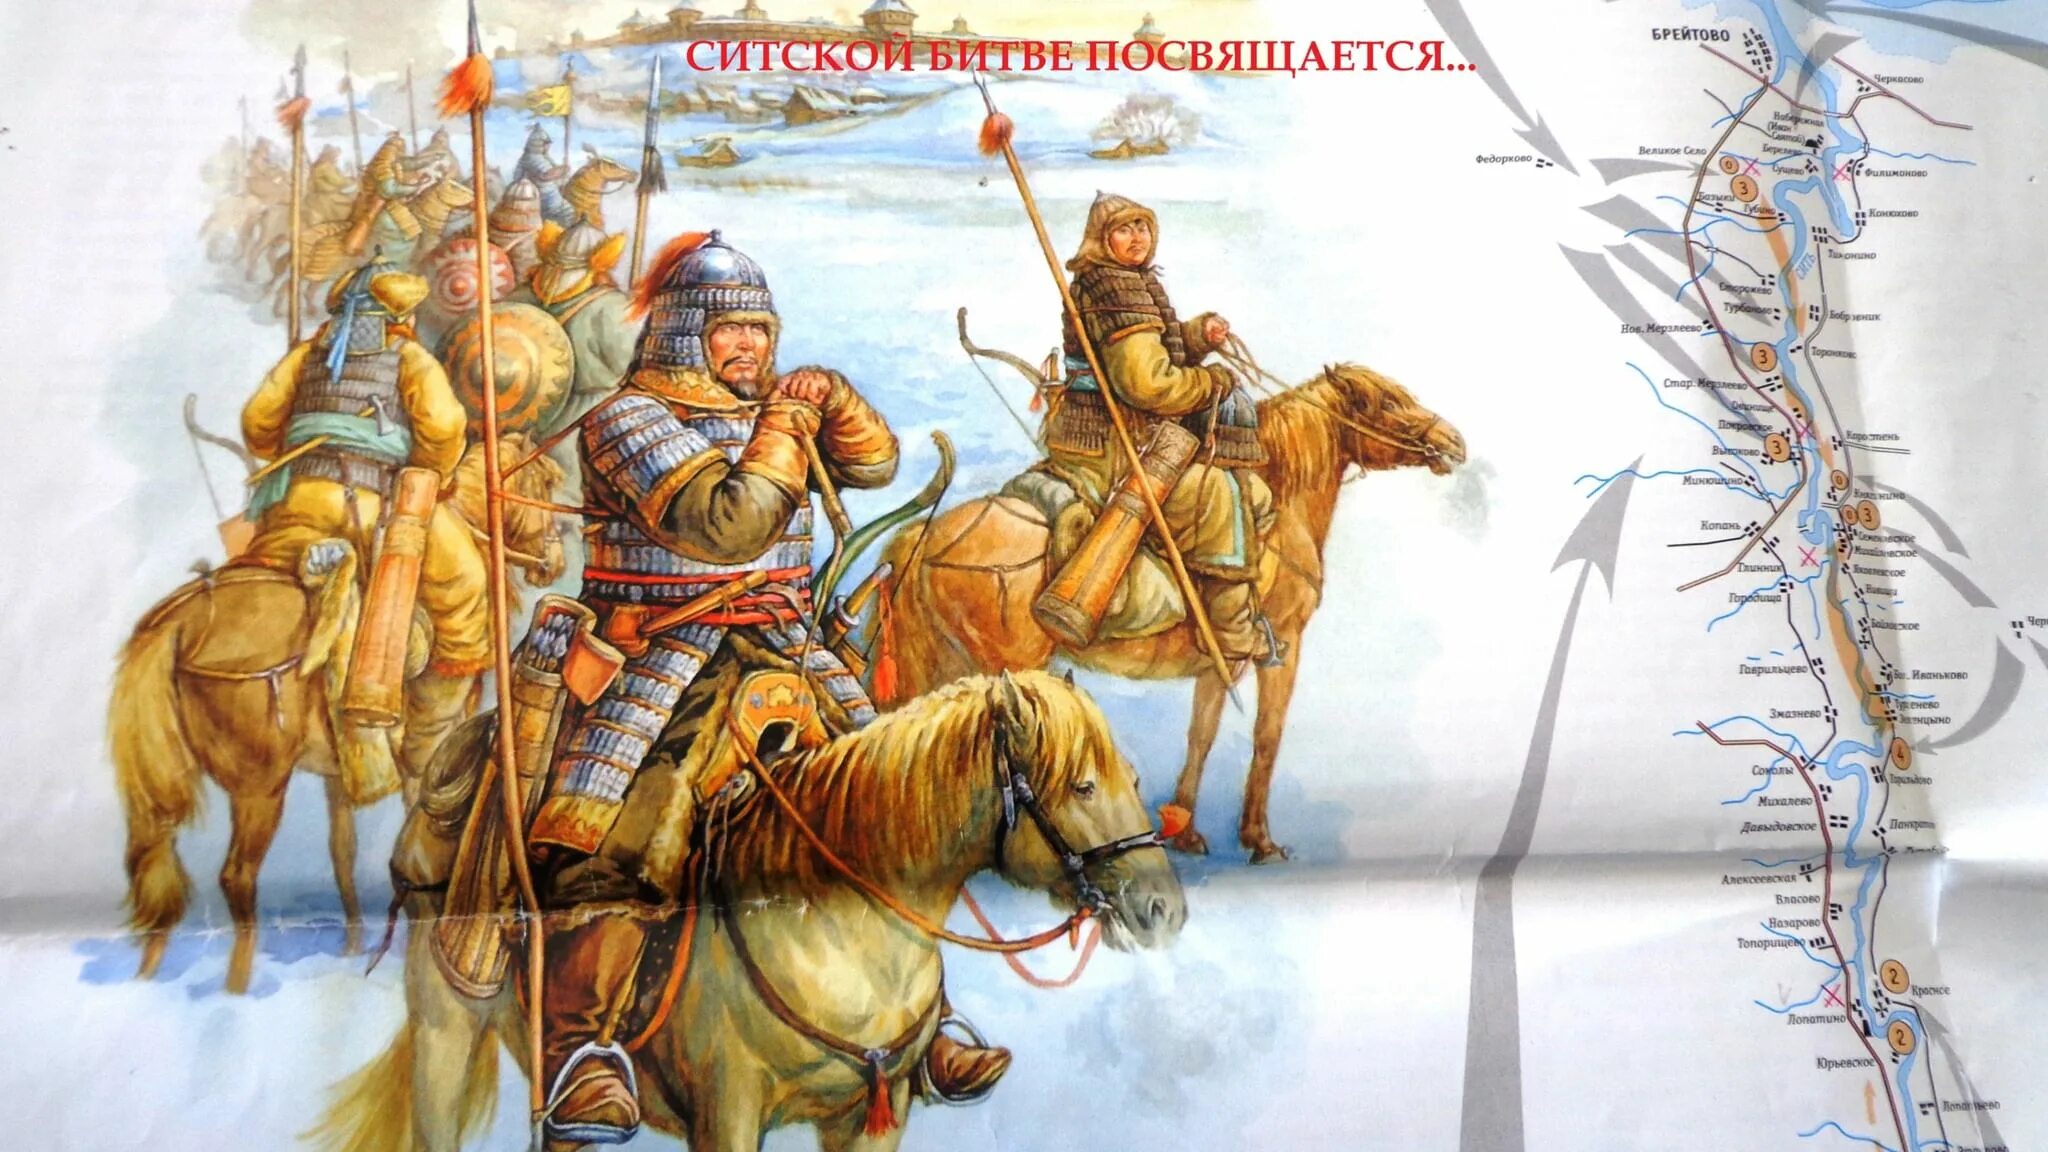 На реке сити русское войско разбило монголов. Битва на реке сить 1238. Битва на реке Сити Батый. Битва Батыя на реке сить.